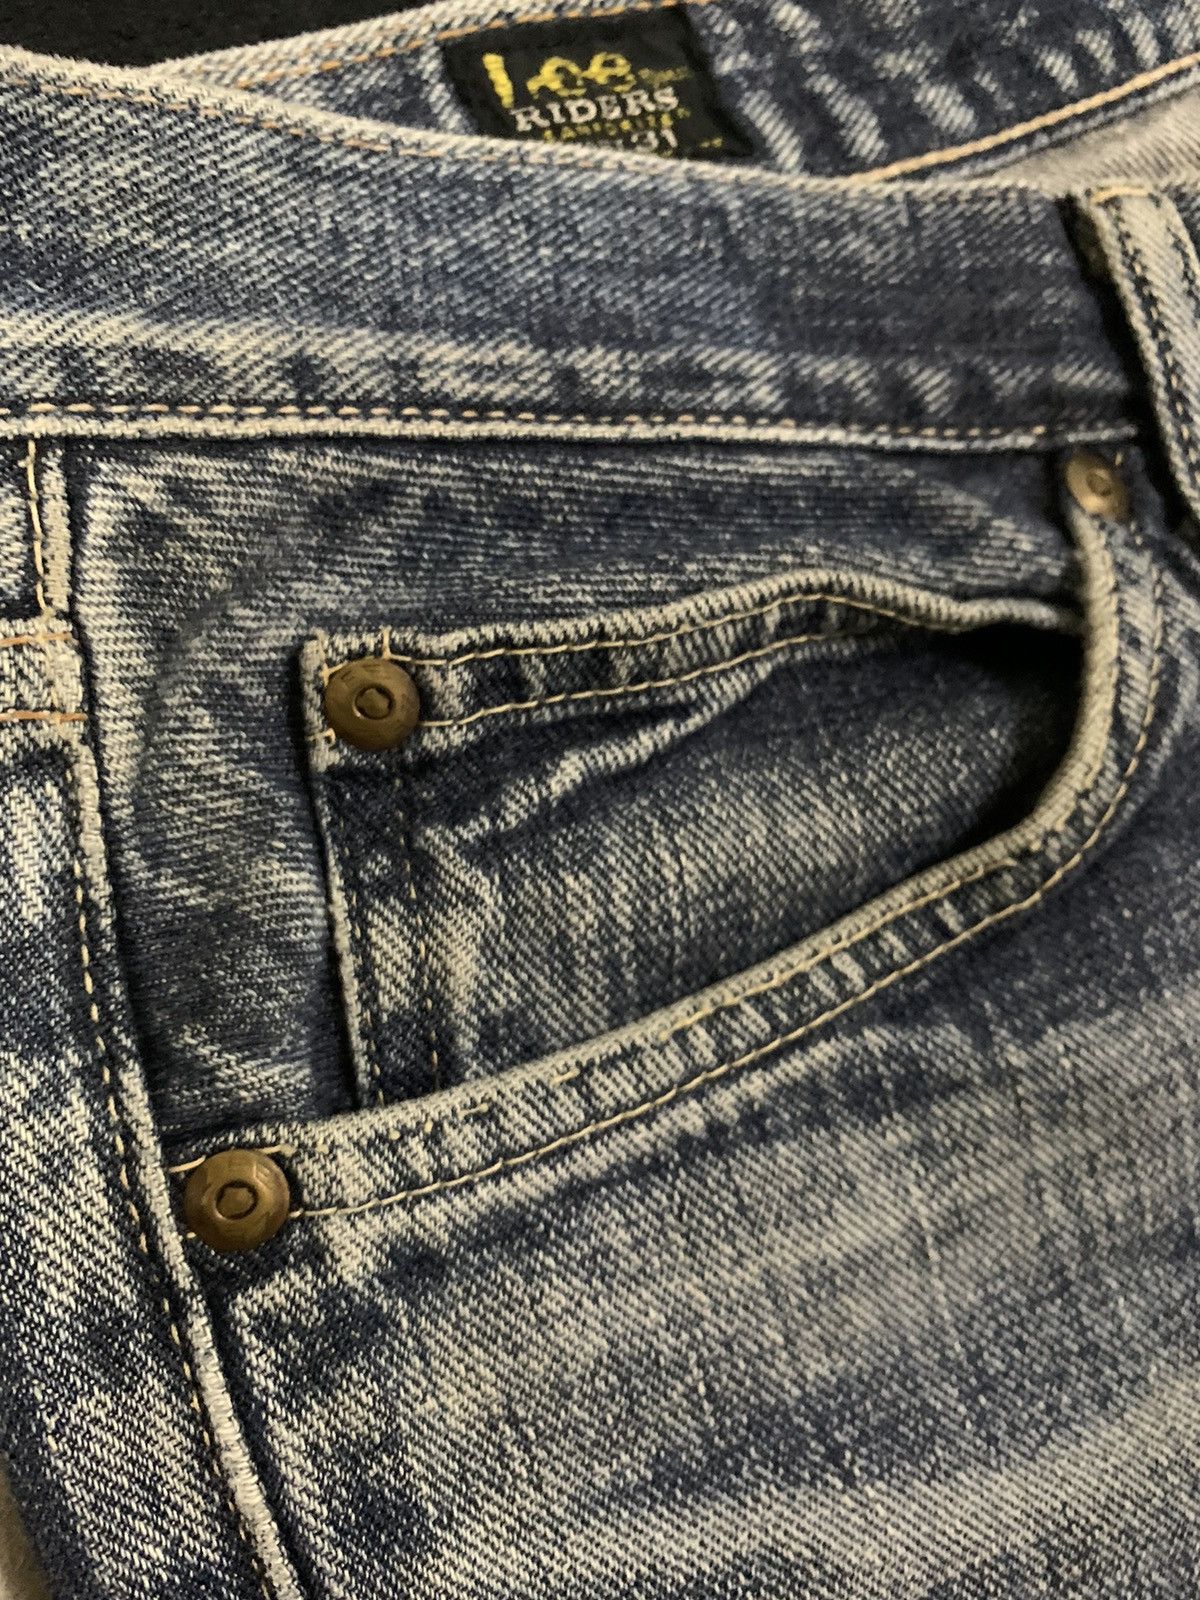 Lee Vintage Lee Cowboy Sanforized Distressed Flared Jeans Size US 31 - 5 Thumbnail